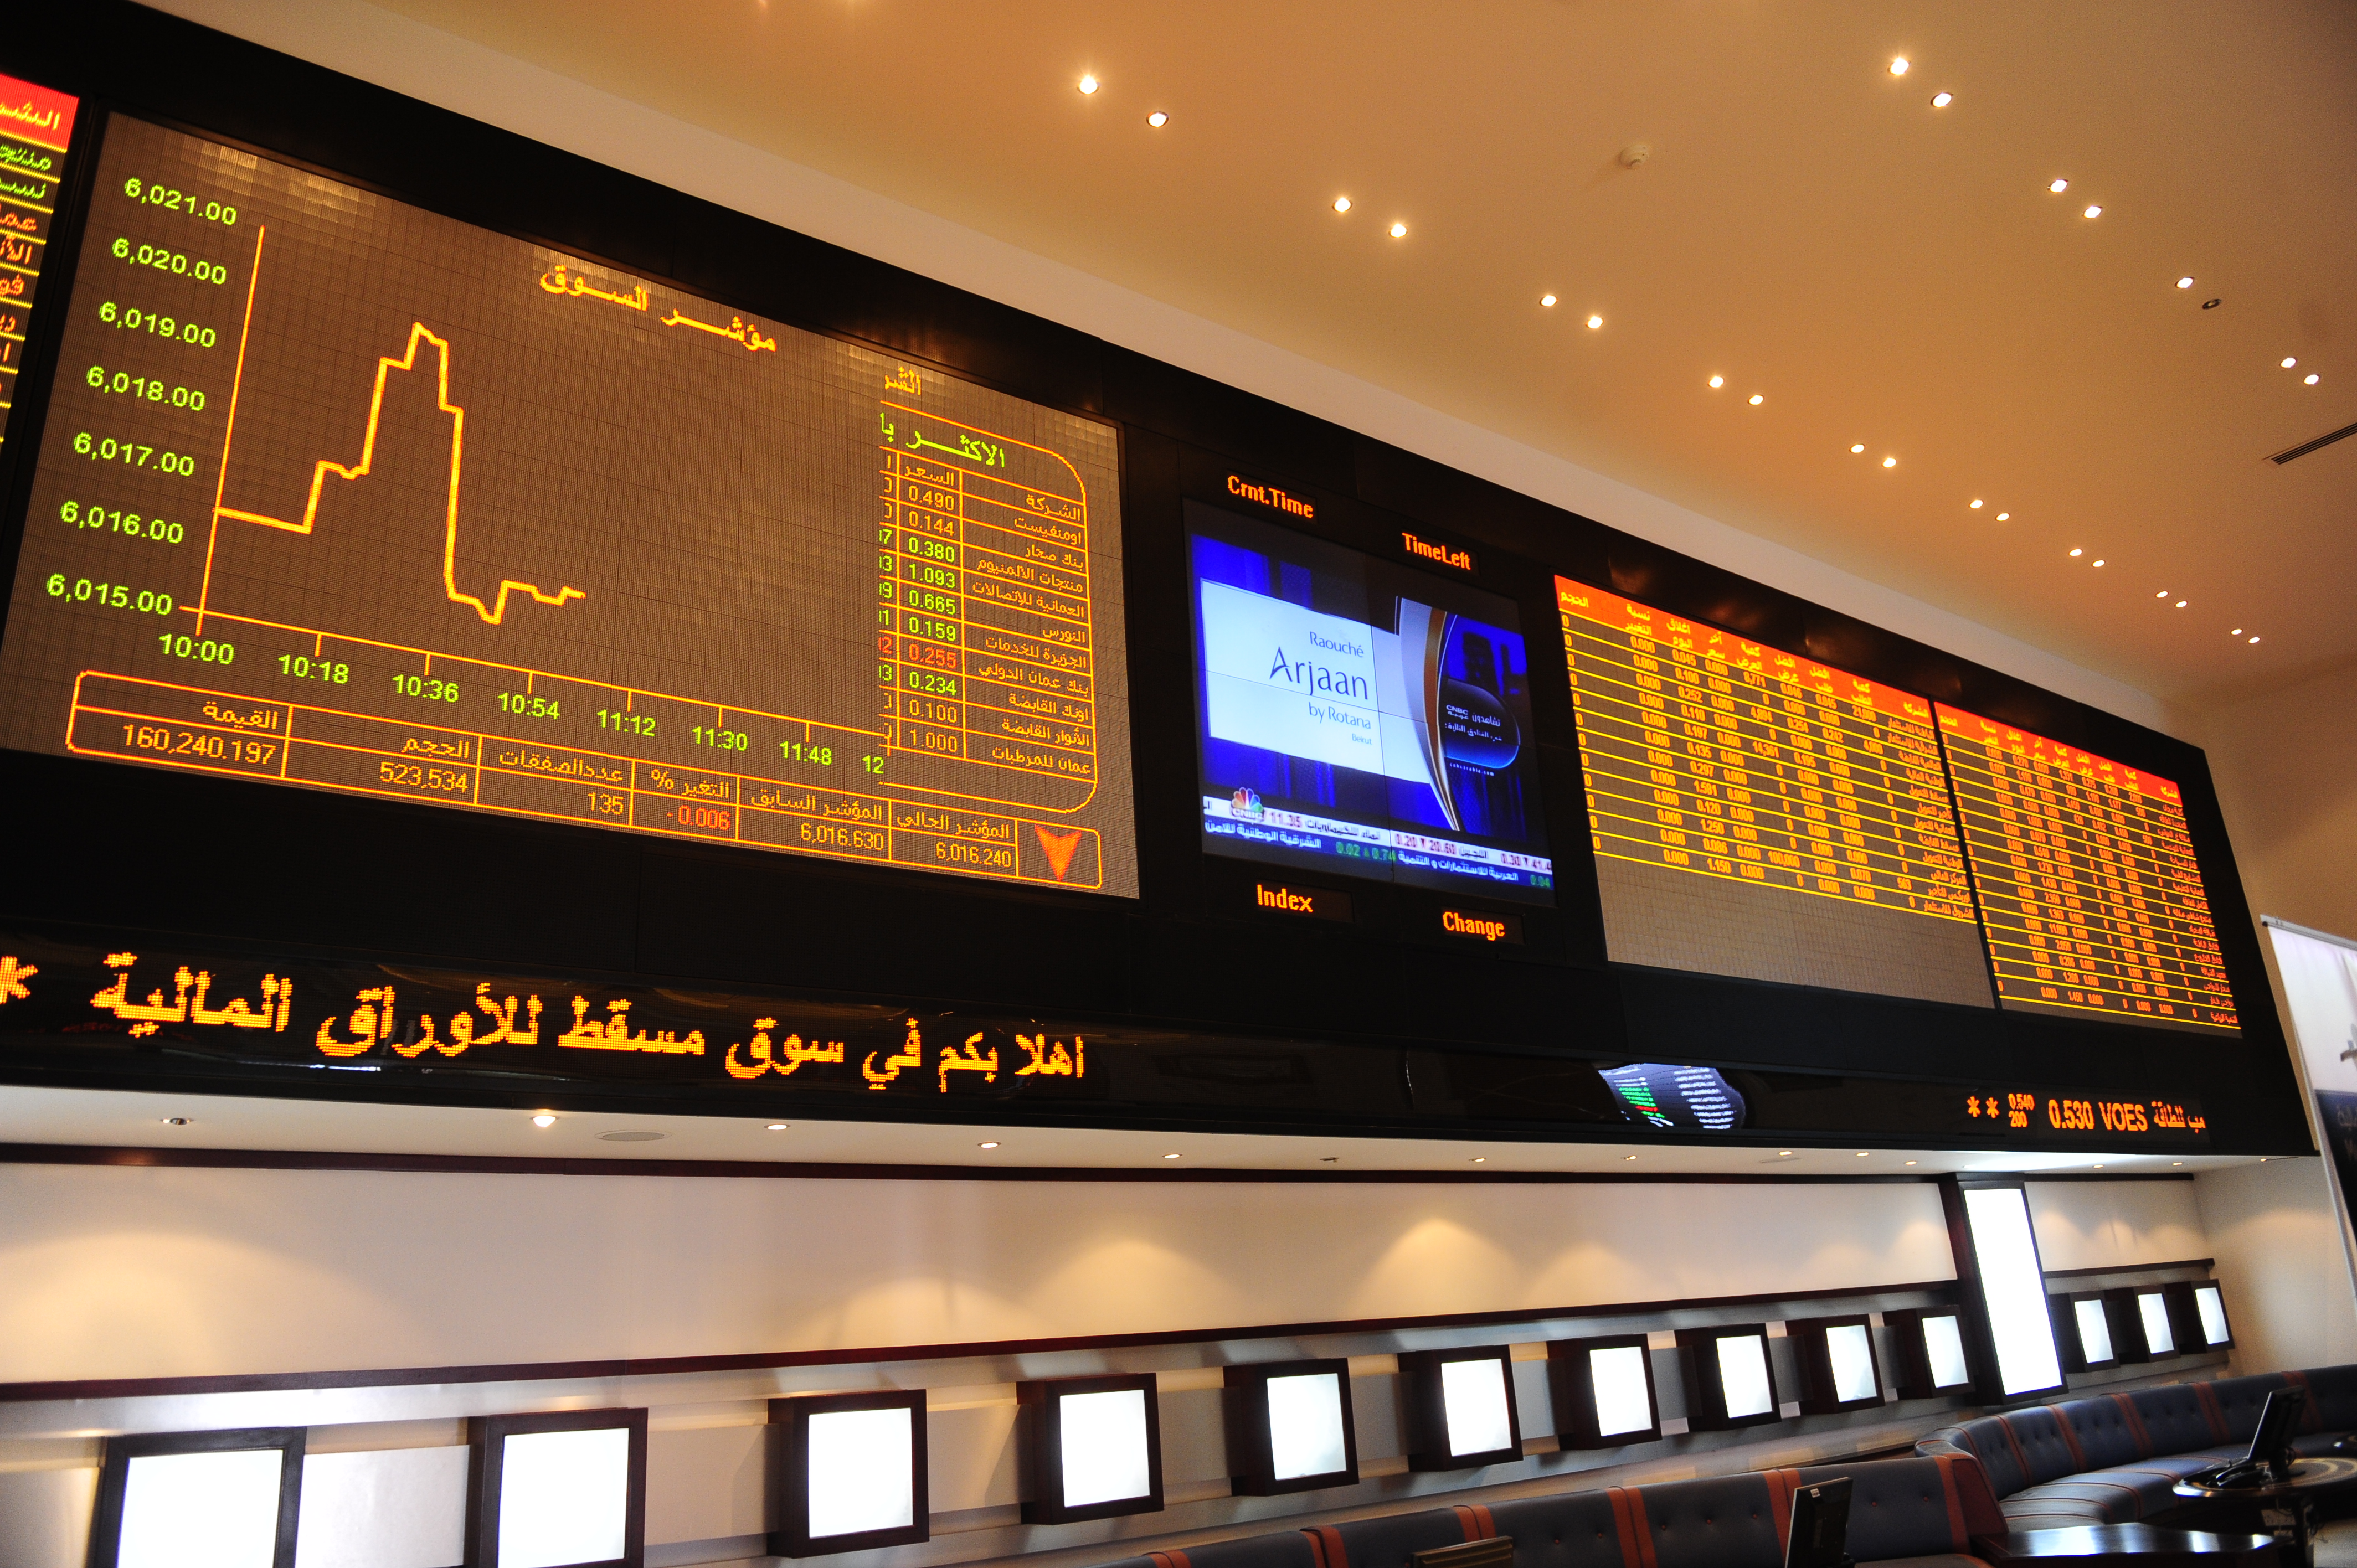 Financial stocks weakness weighs on Muscat bourse